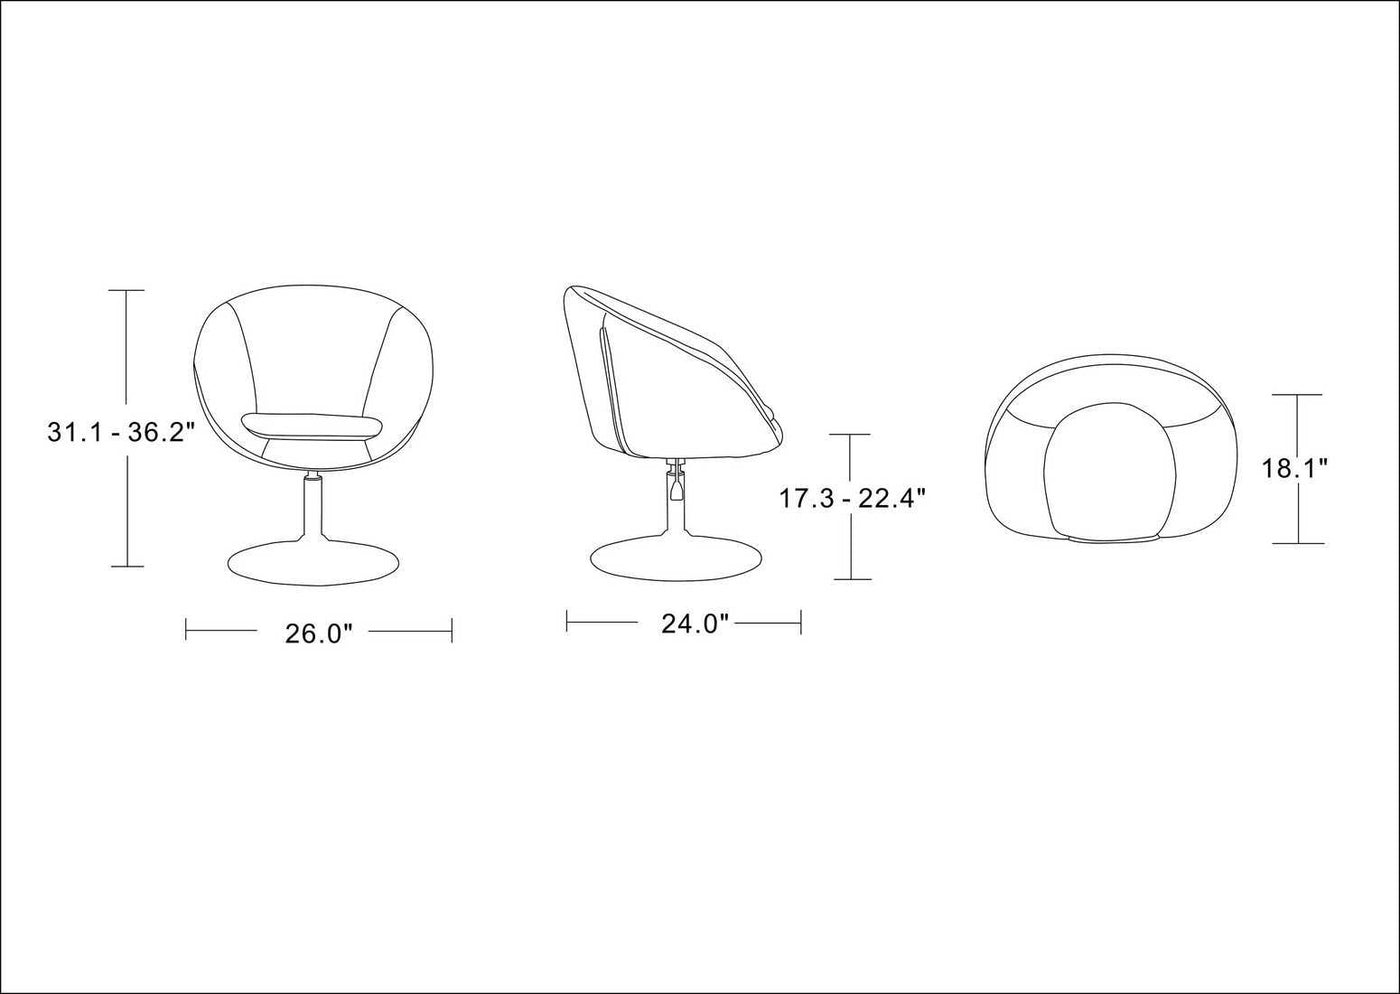 Hita Adjustable Height Swivel Chair - Red